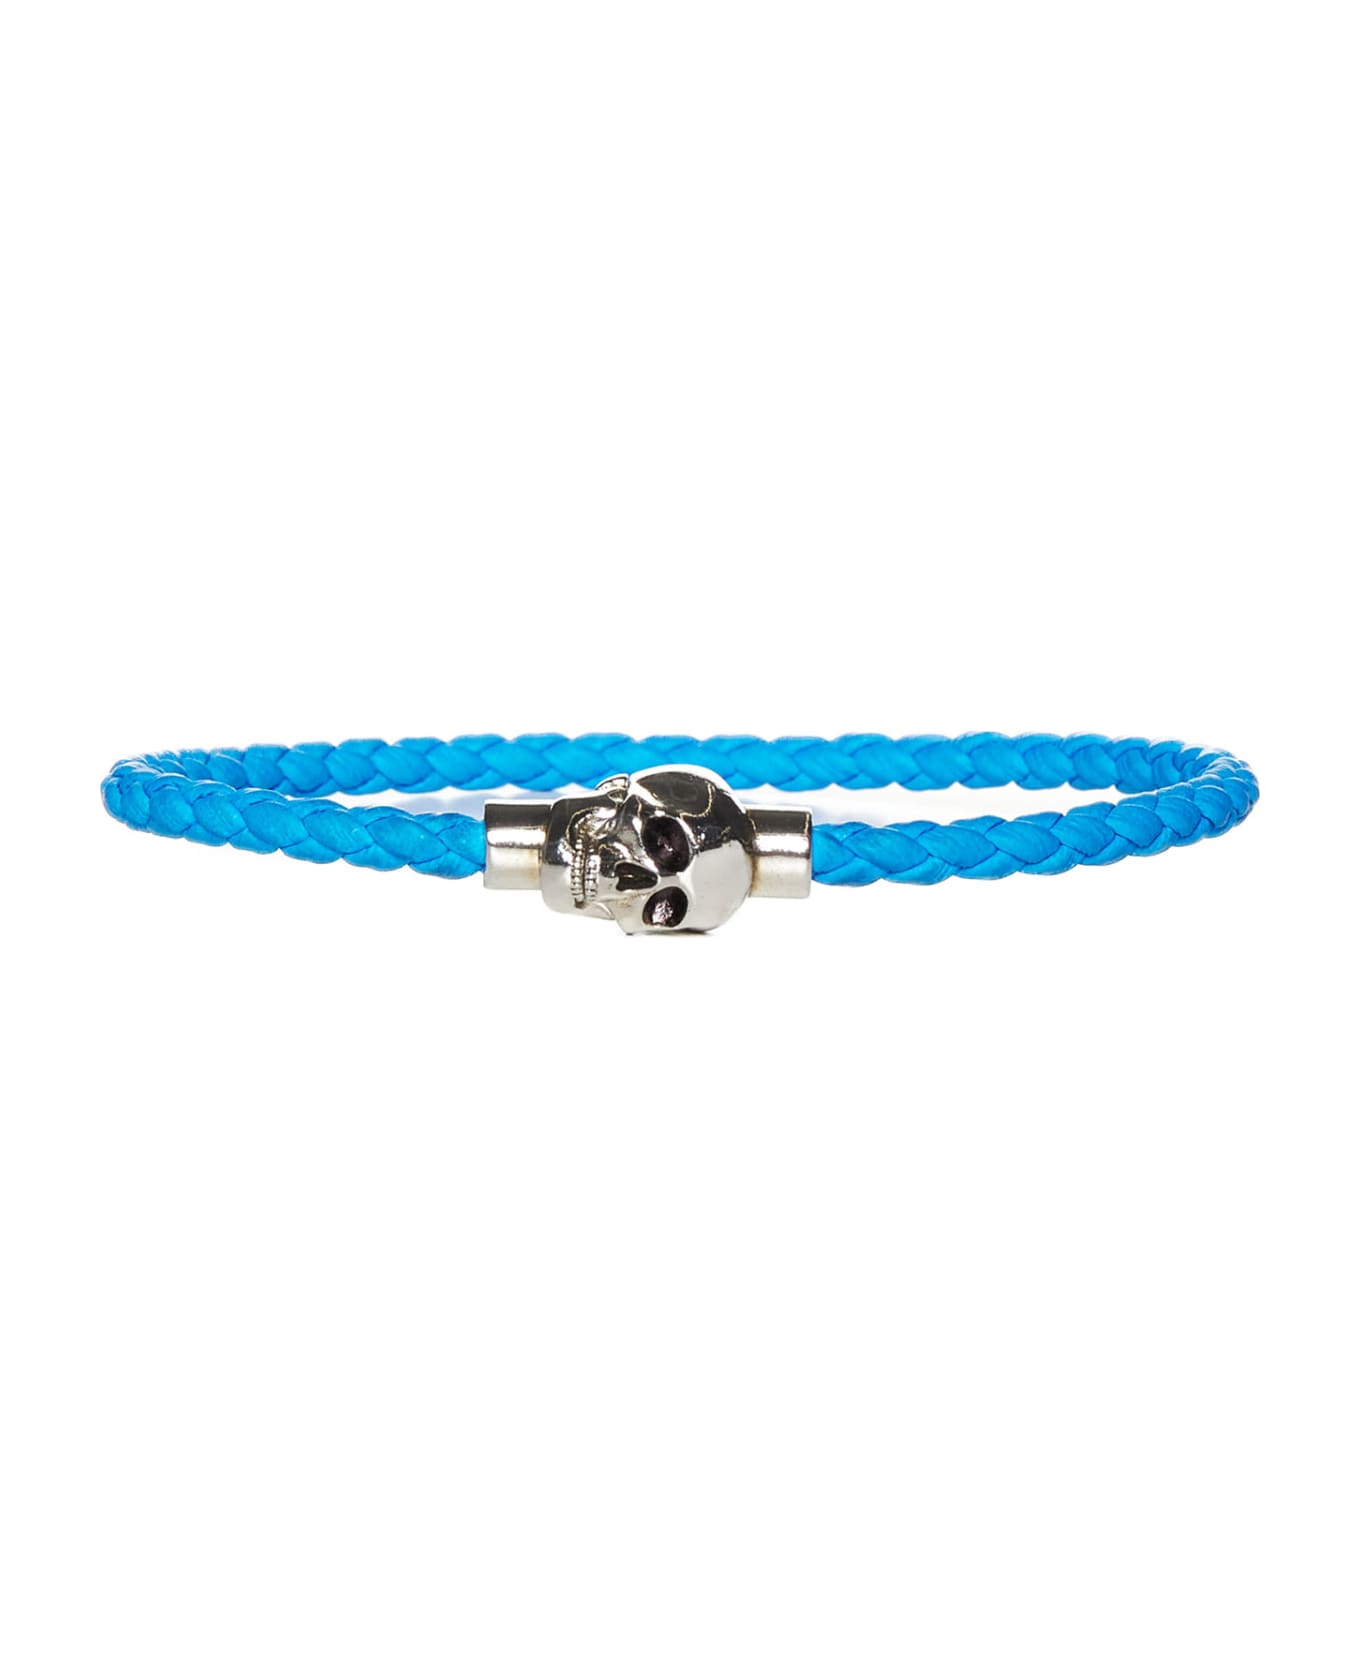 Alexander McQueen Bracelet - A.silver/elect.blue